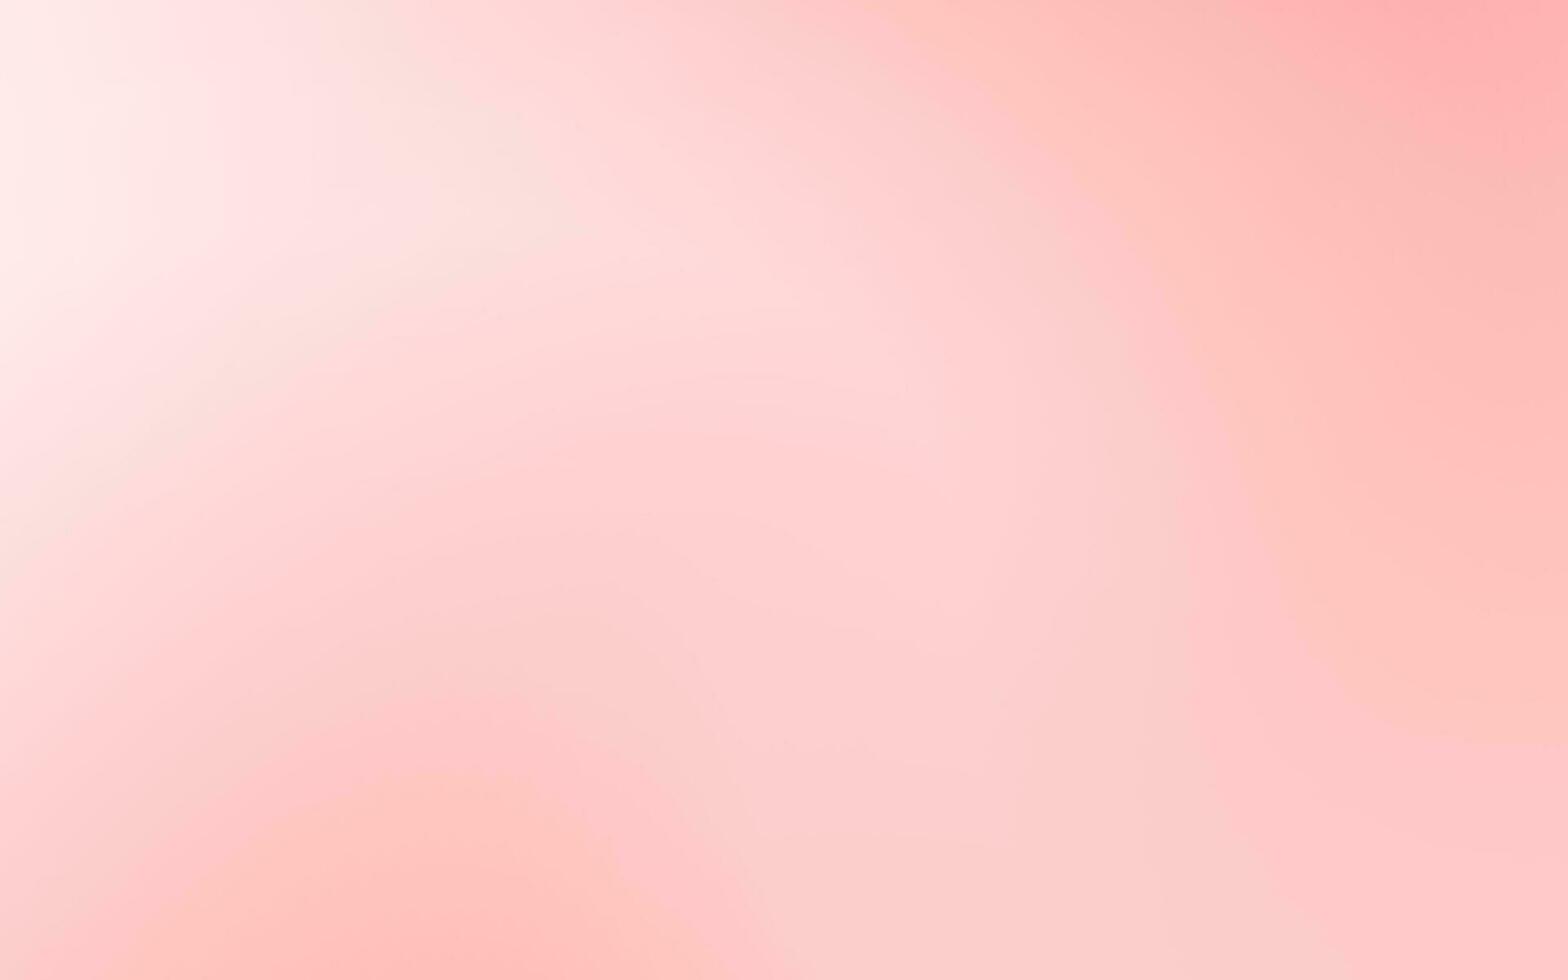 Pink background with soft light. Vector illustration. Eps10